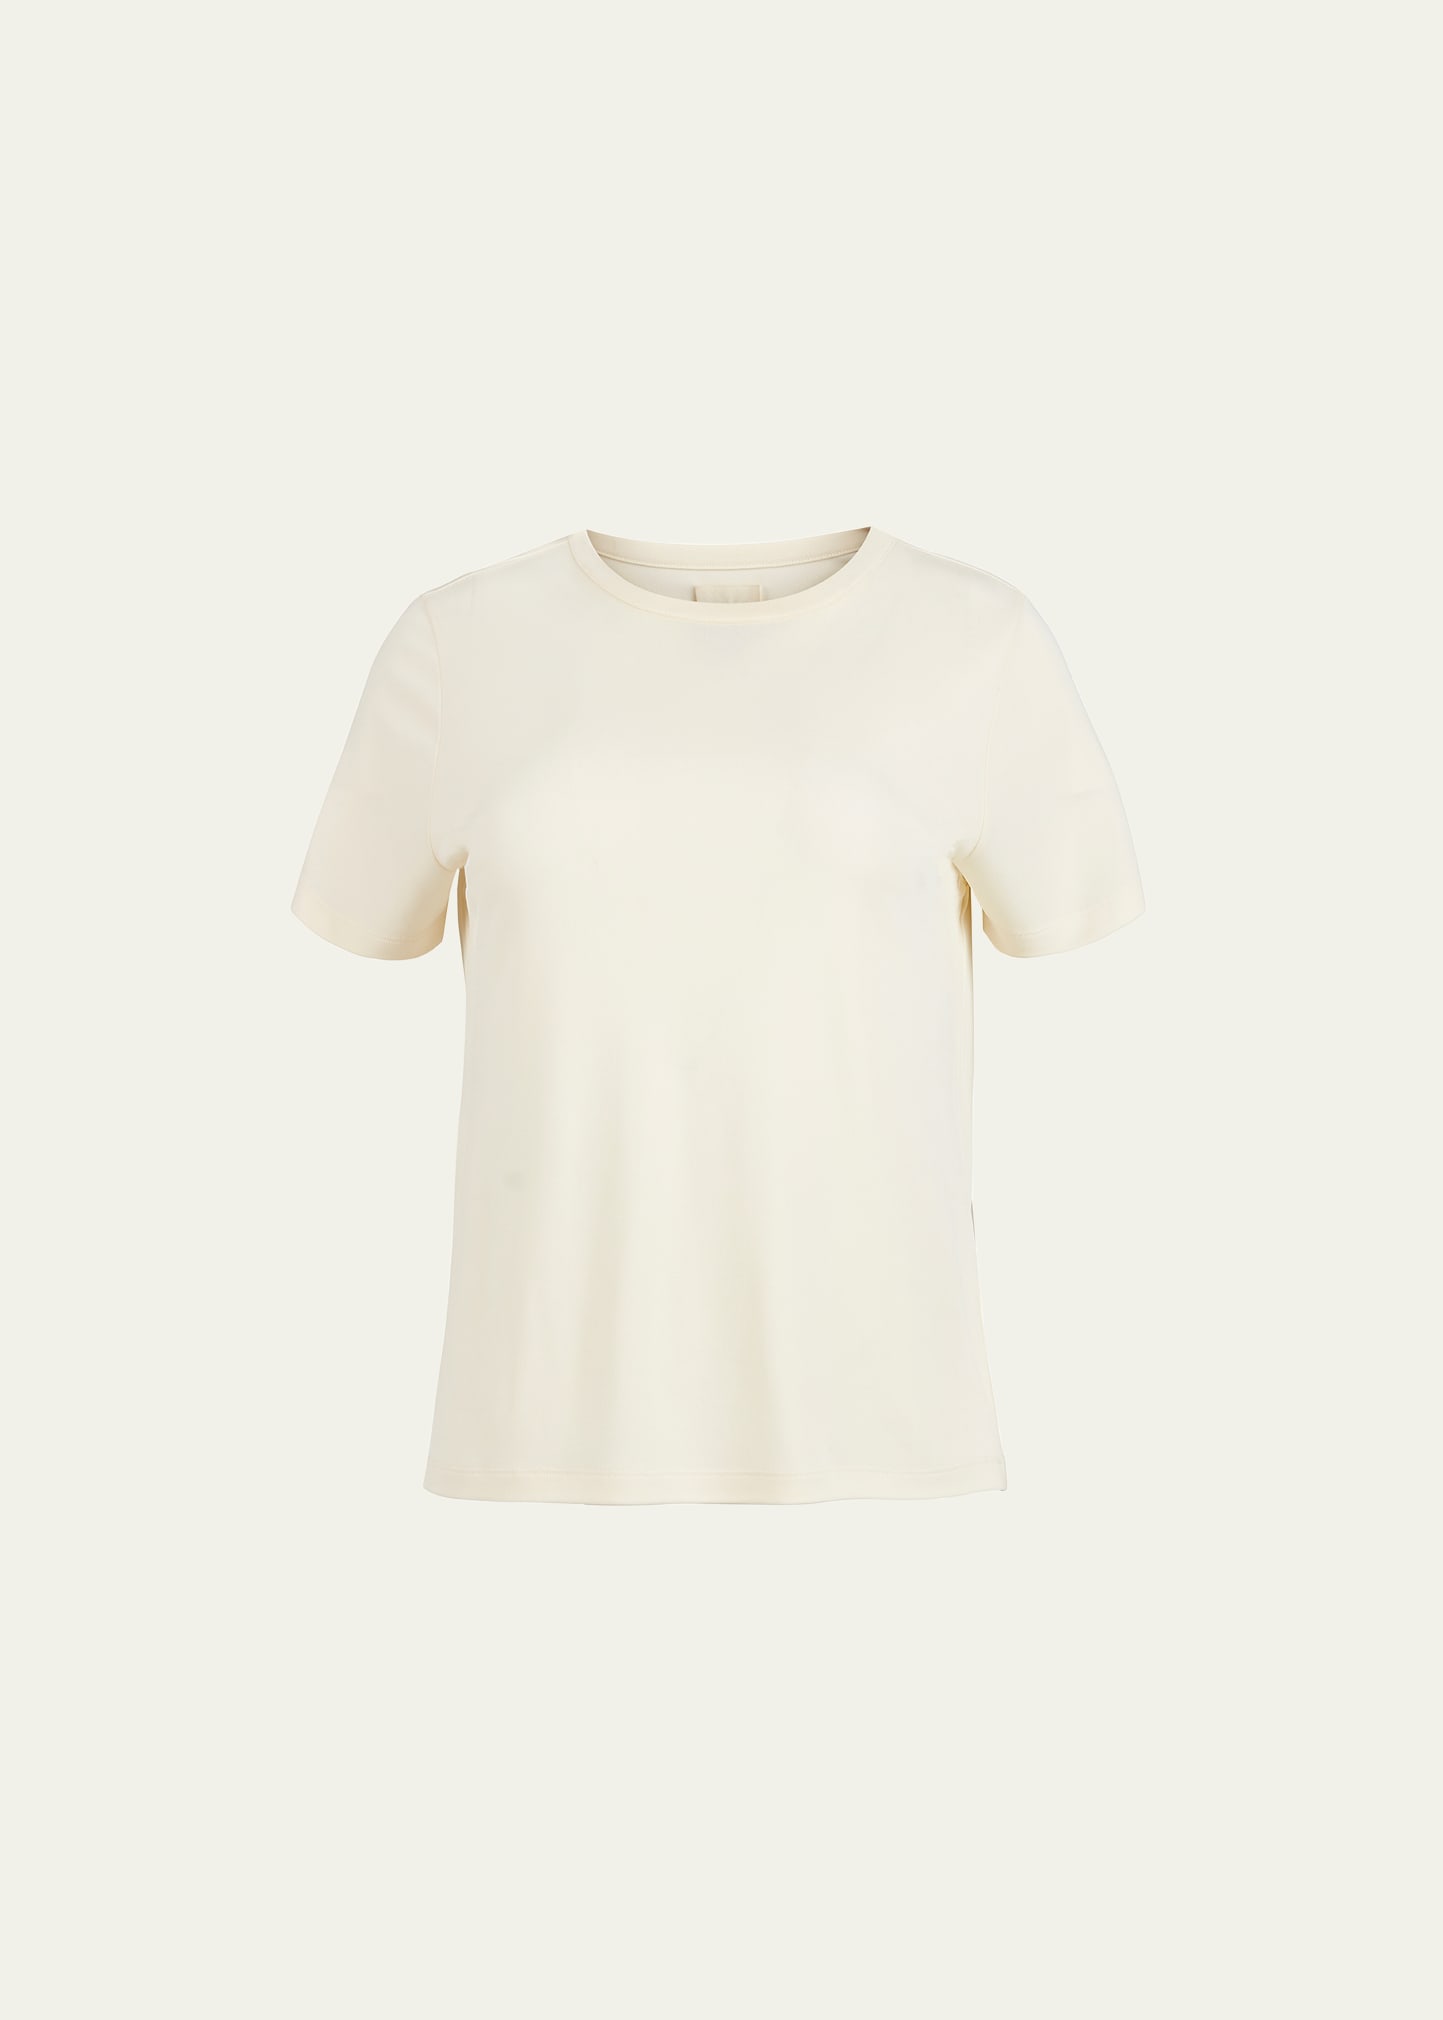 Emmylou Short-Sleeve Cotton T-Shirt